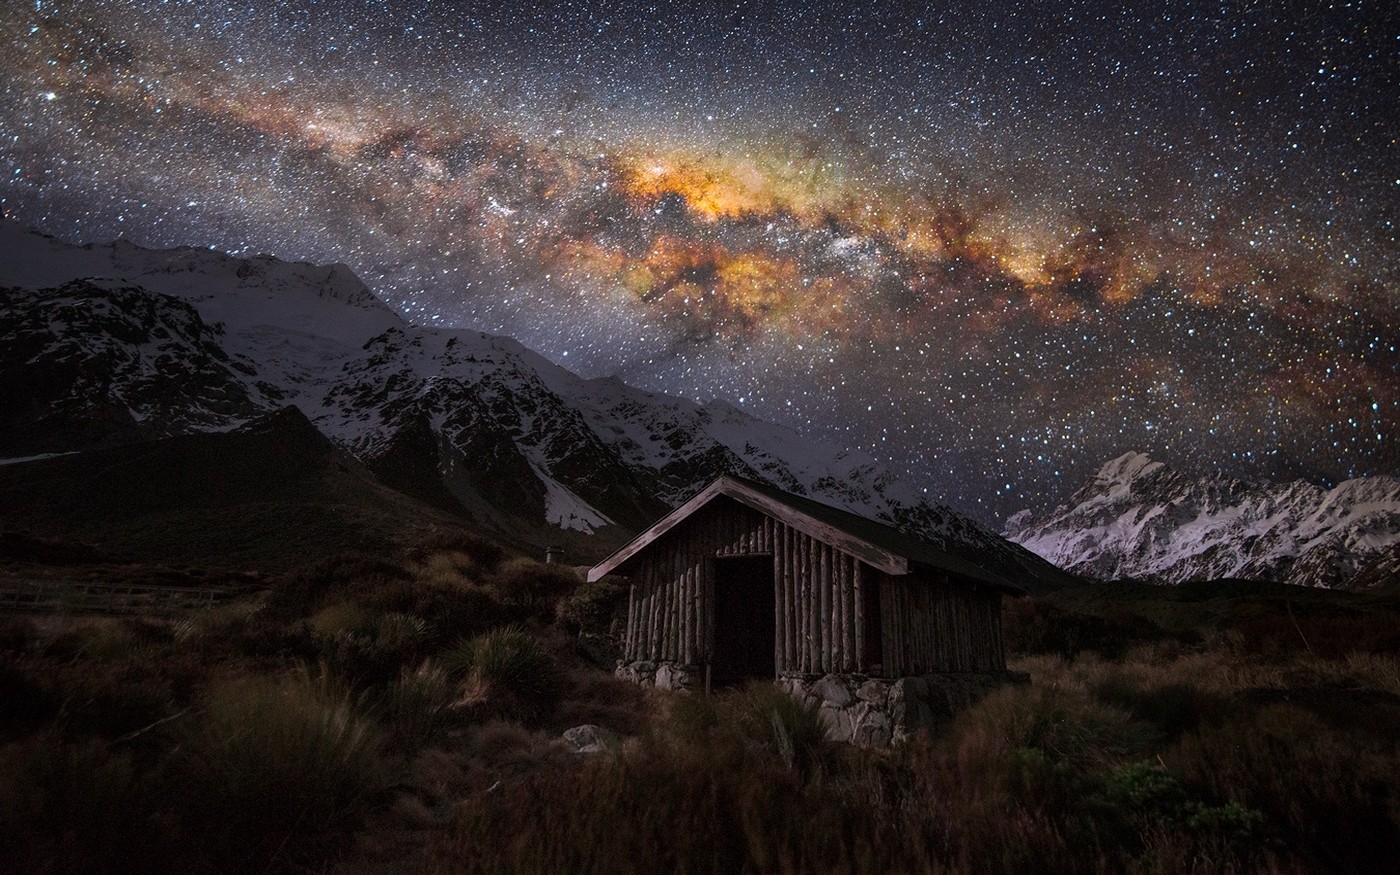 General 1400x875 nature landscape starry night hut Milky Way snowy peak grass mountains space New Zealand universe stars sky